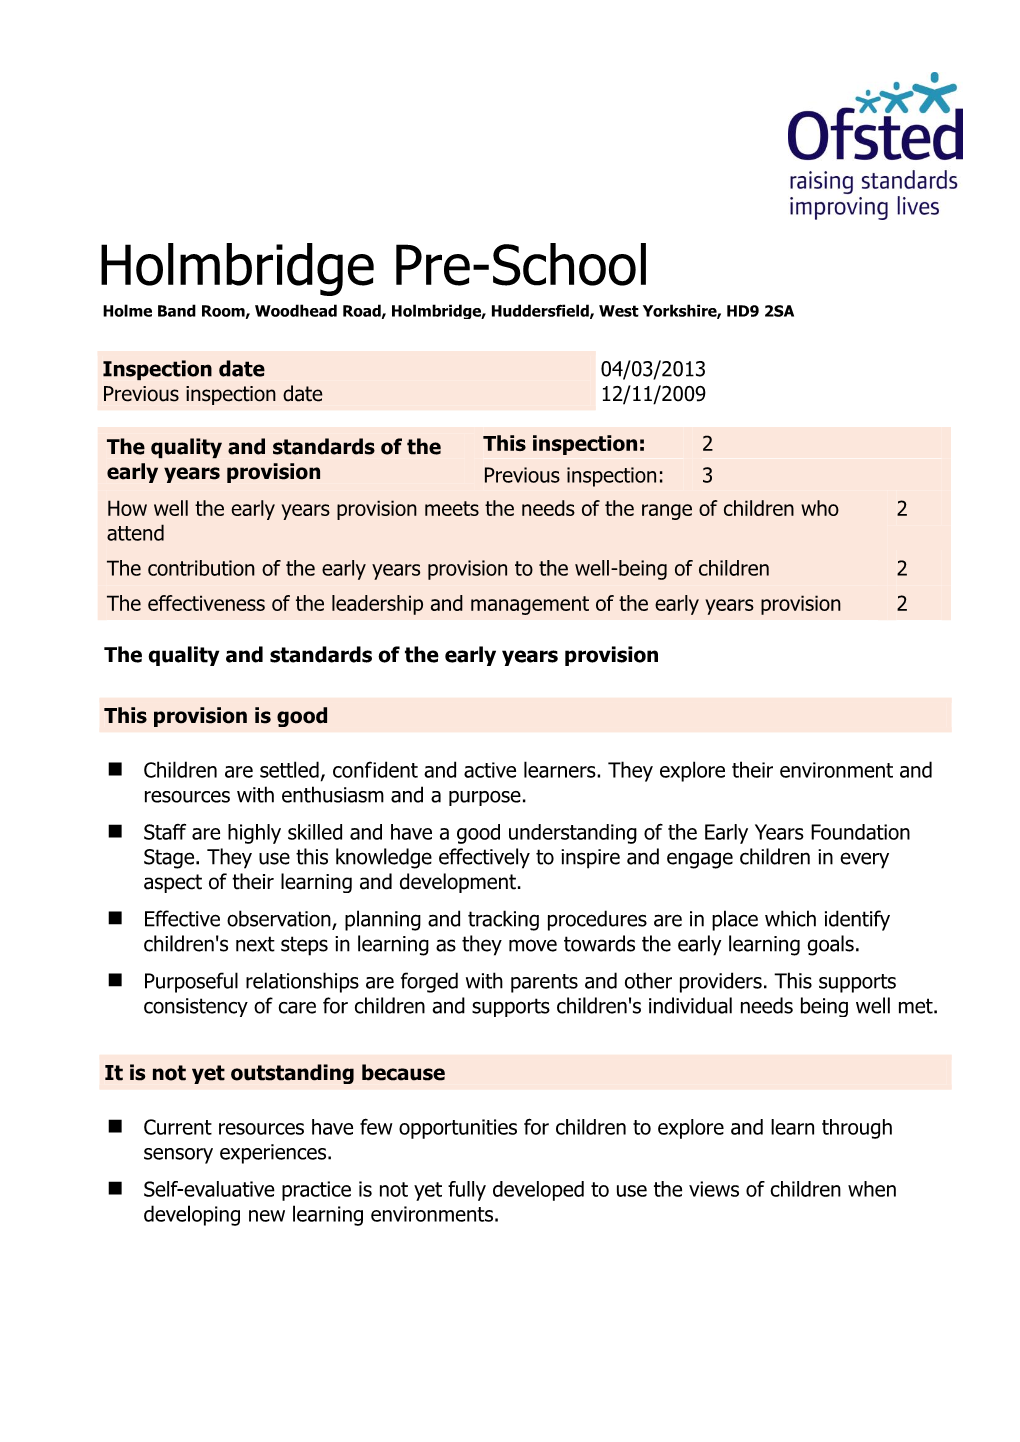 Holmbridge Pre-School Holme Band Room, Woodhead Road, Holmbridge, Huddersfield, West Yorkshire, HD9 2SA